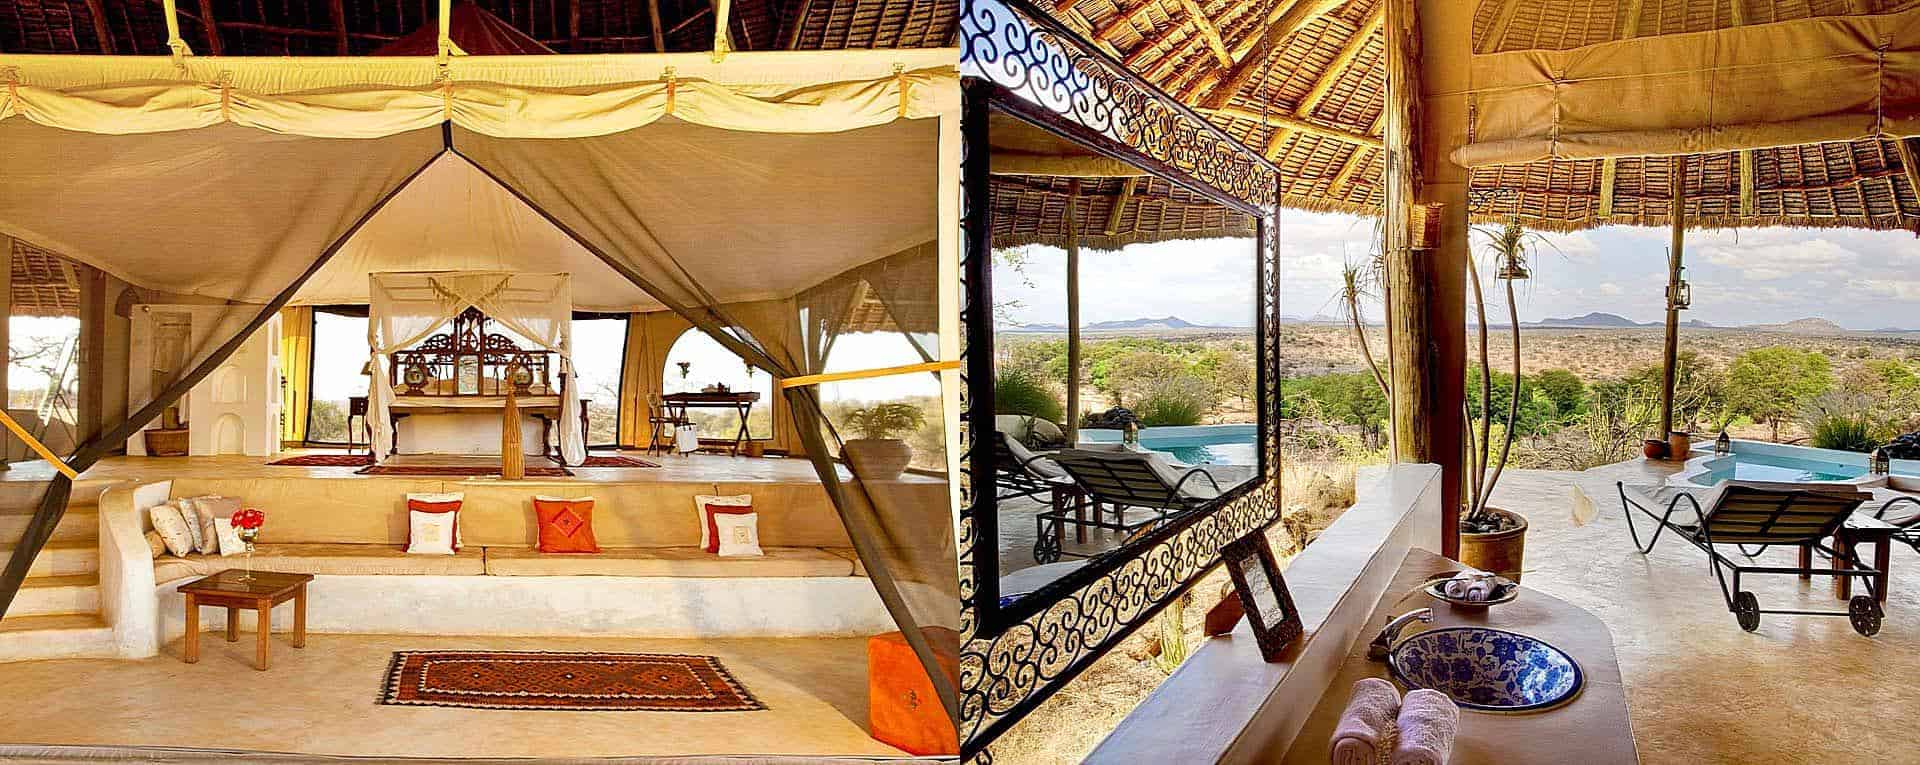 Sasaab Lodge, Samburu - Kenya - AfricanMecca Safaris & Tours